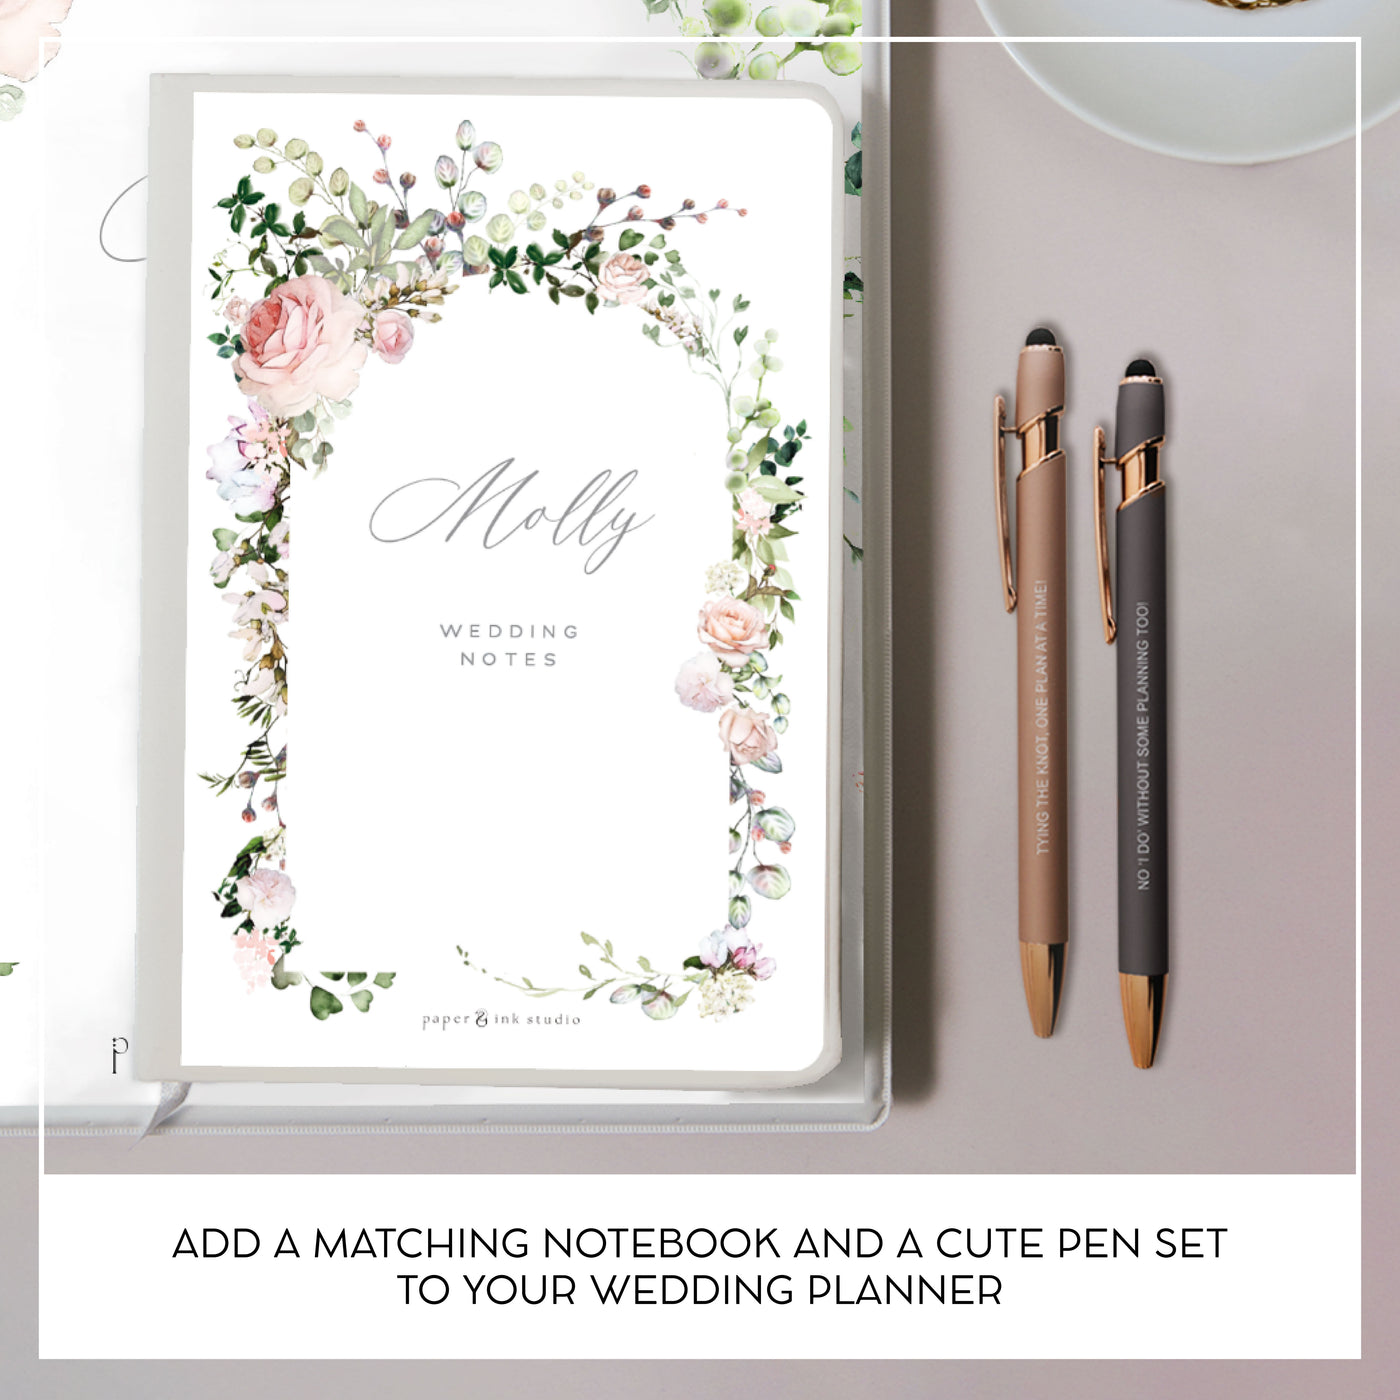 Personalised Wedding Planner & Organiser - Ultimate Guide w Checklists – Bloom